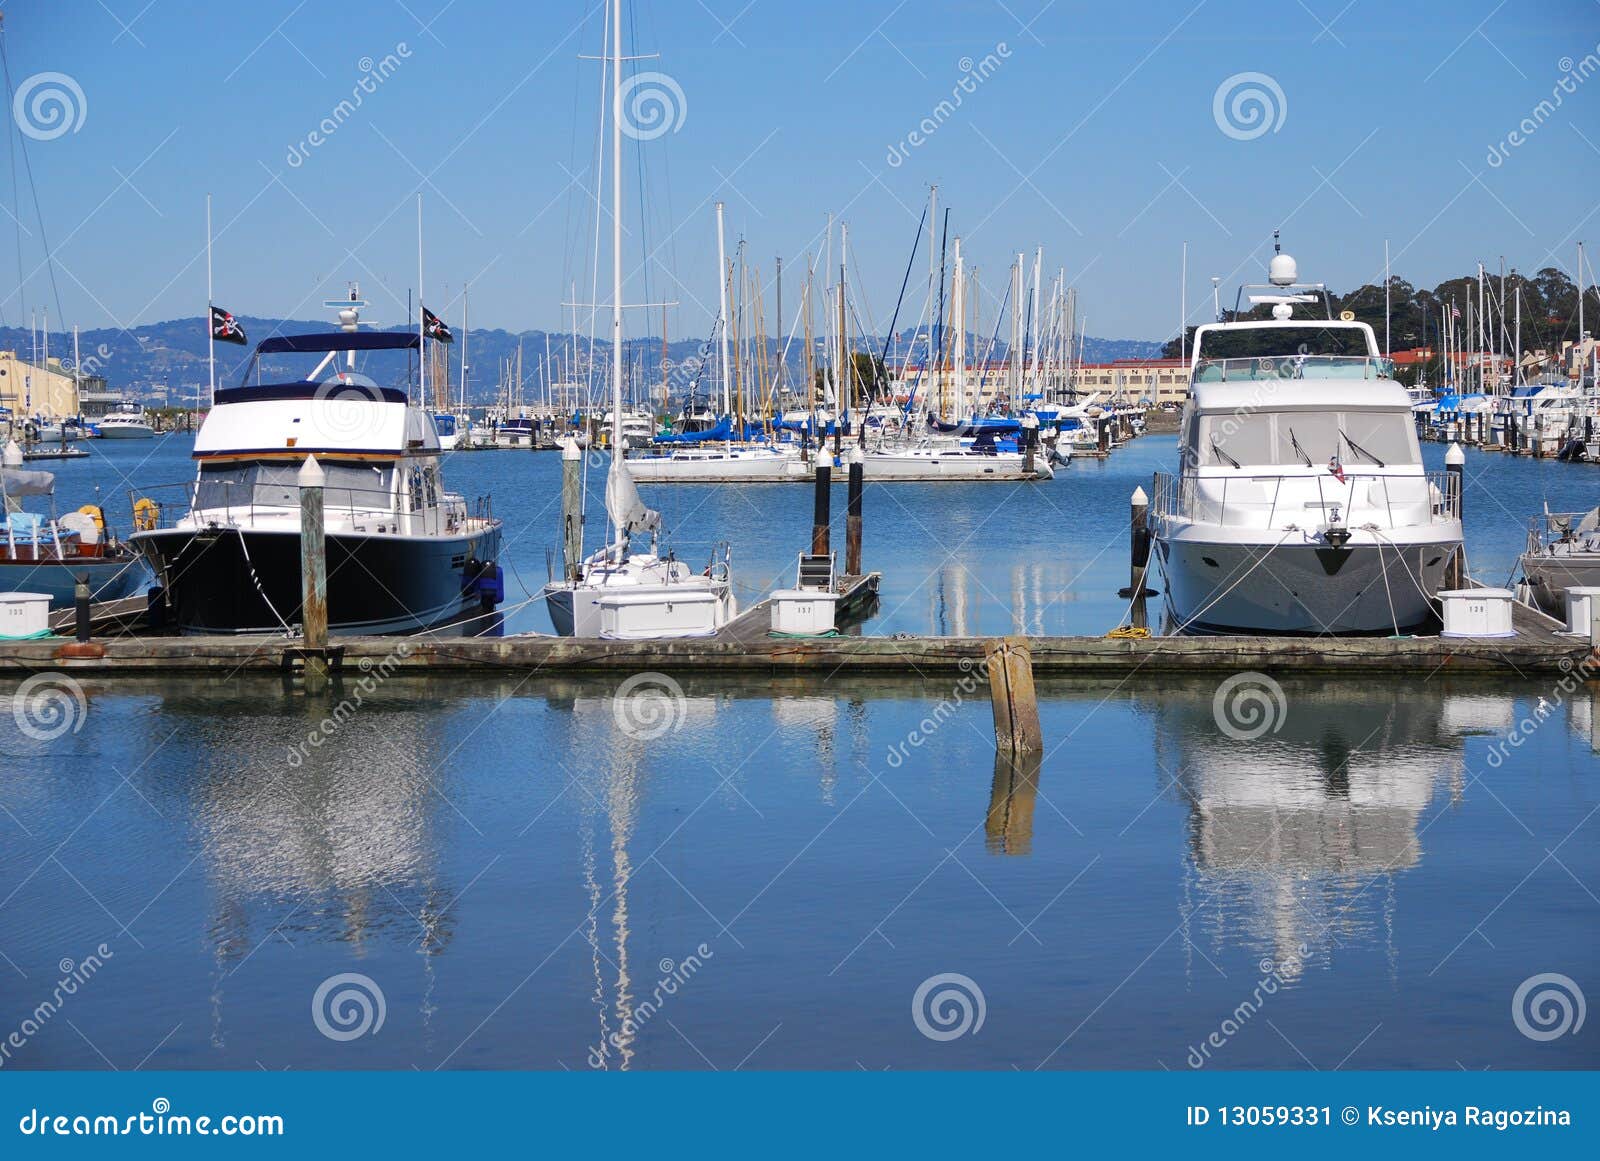 San Francisco Yacht Club stock image. Image of restful - 13059331